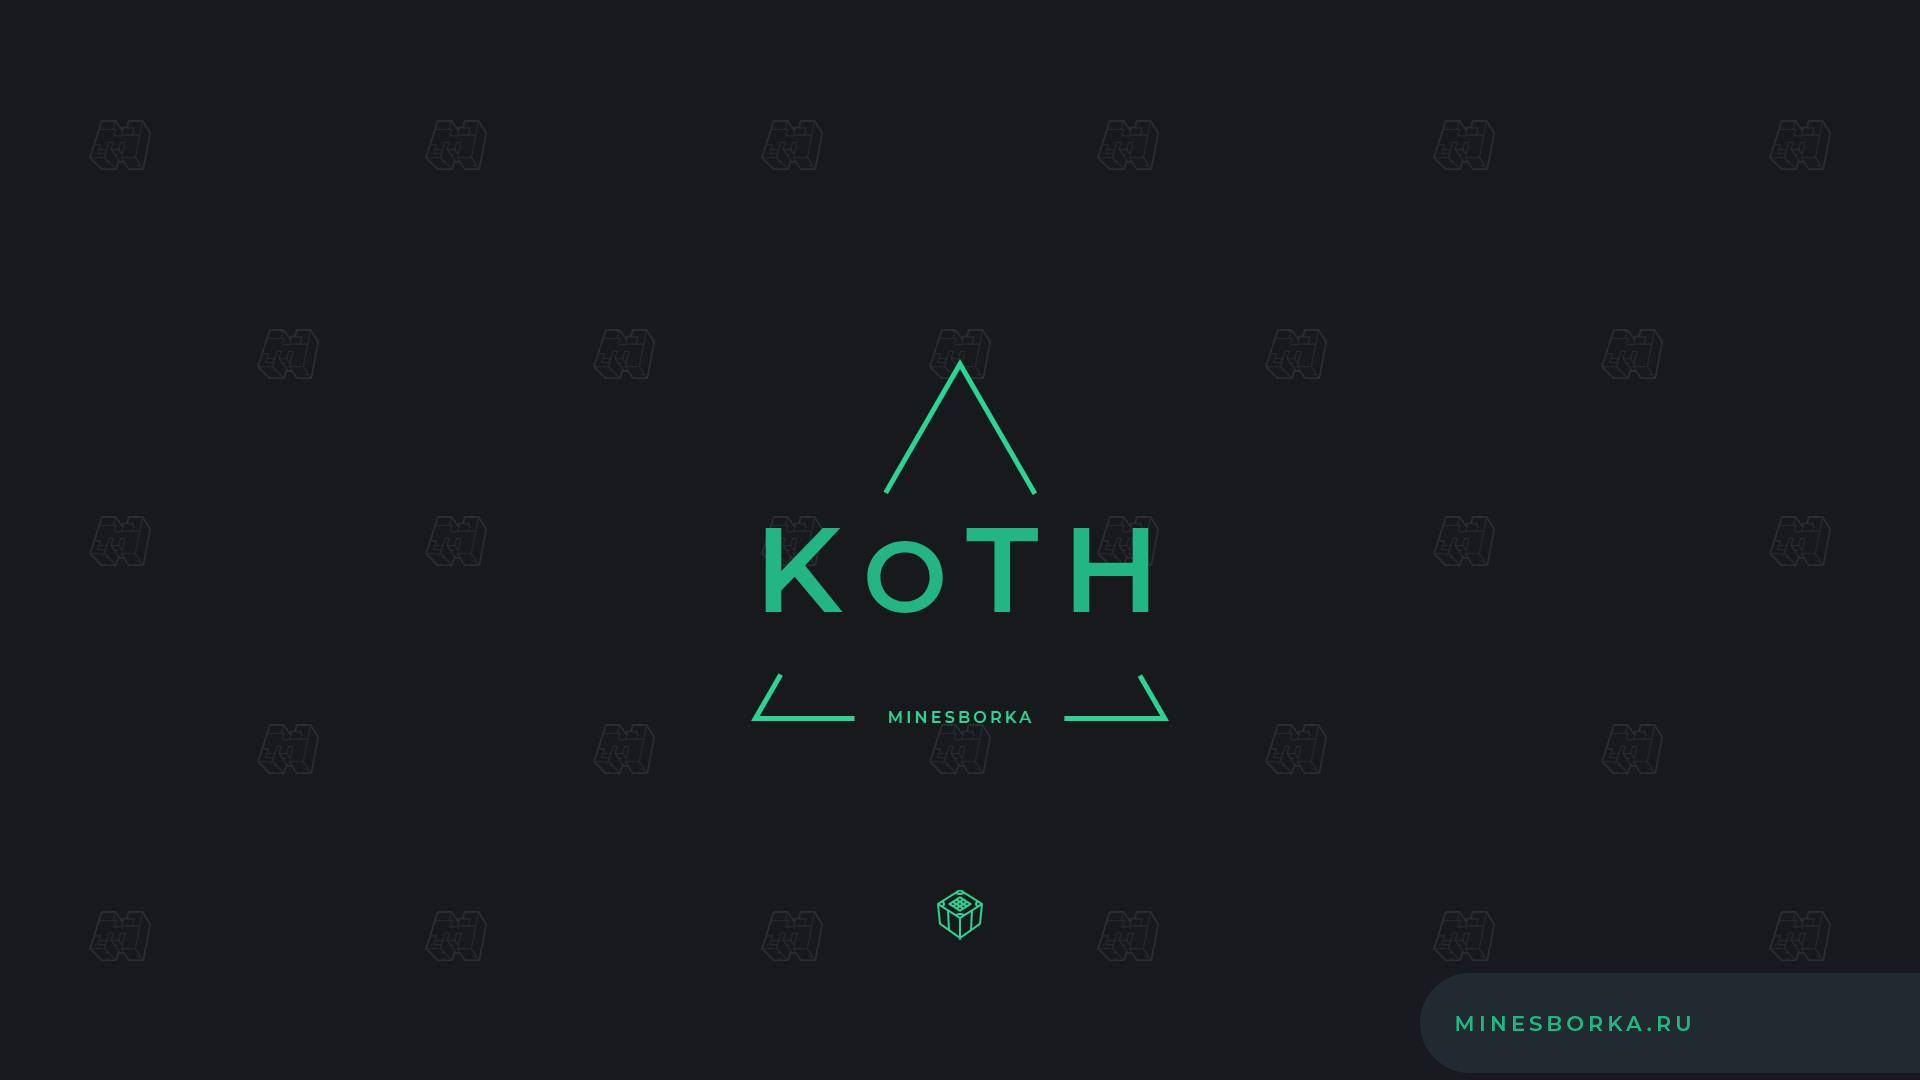 KOTH (King Of The Hill) - Мини-игра царь горы на сервере | Плагин на мини-игру для сервера Minecraft 1.7-1.18